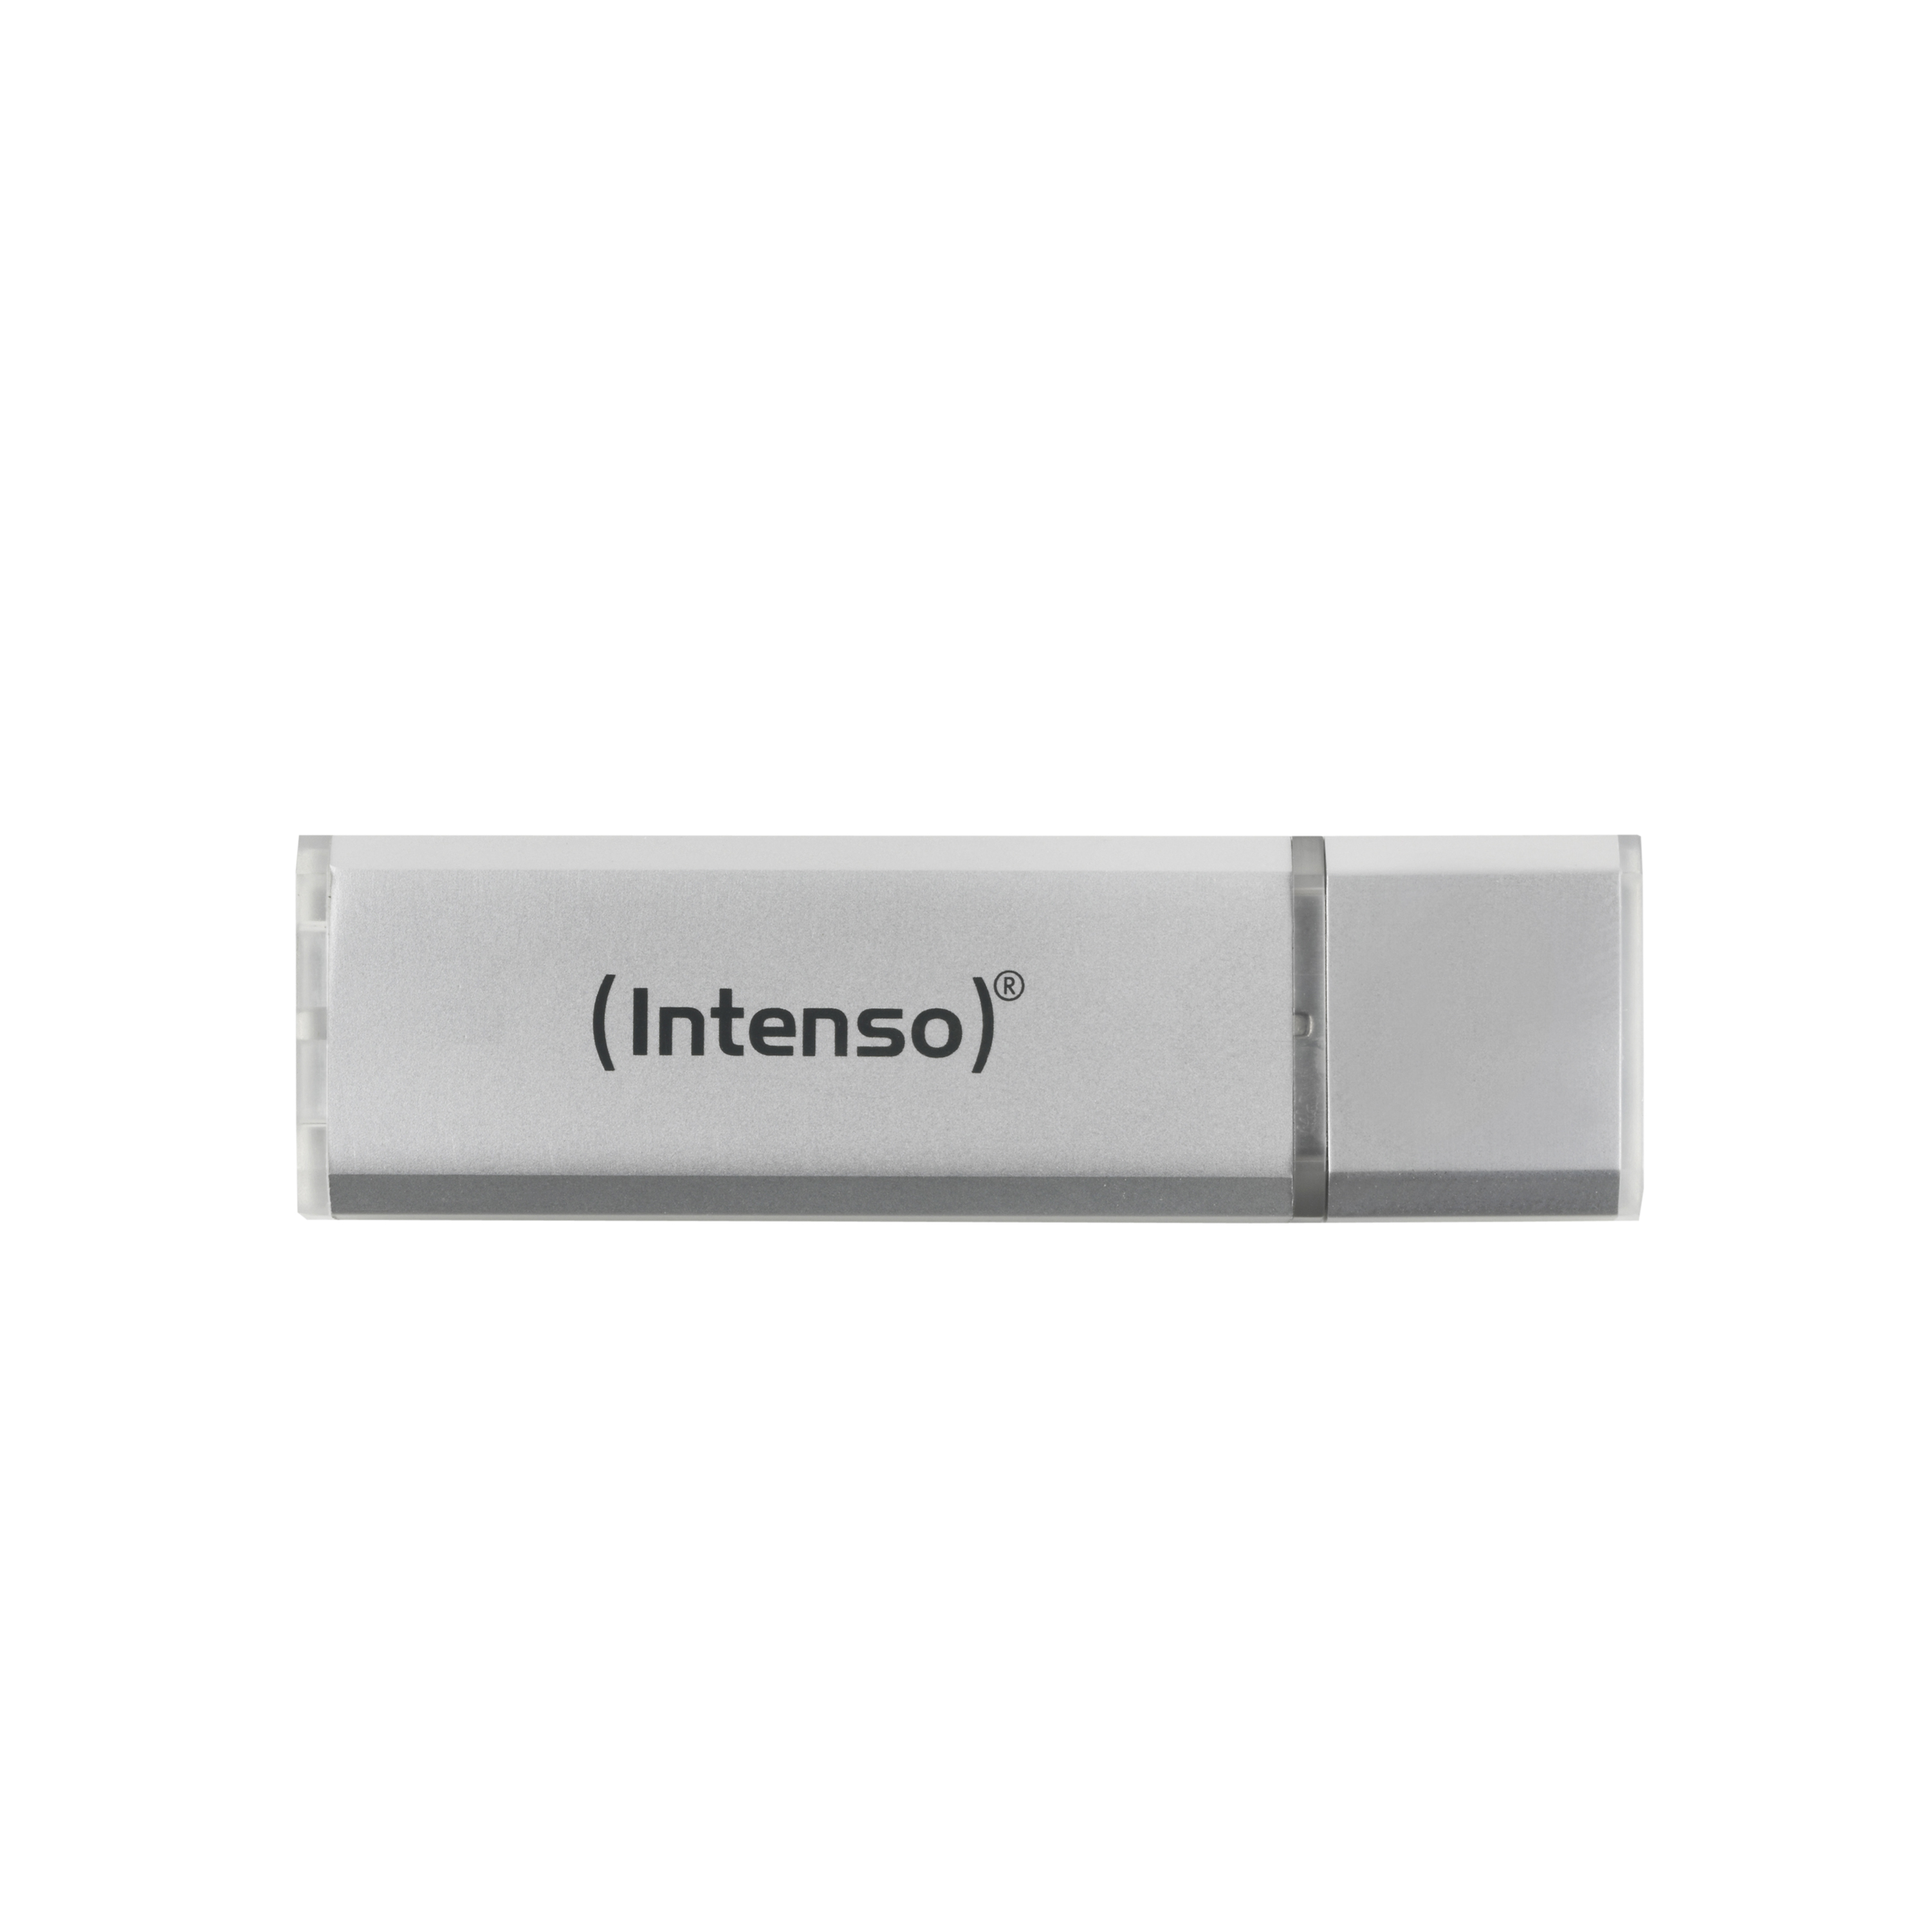 Intenso 32GB USB 3.0 Silver 3531480 - CMS01